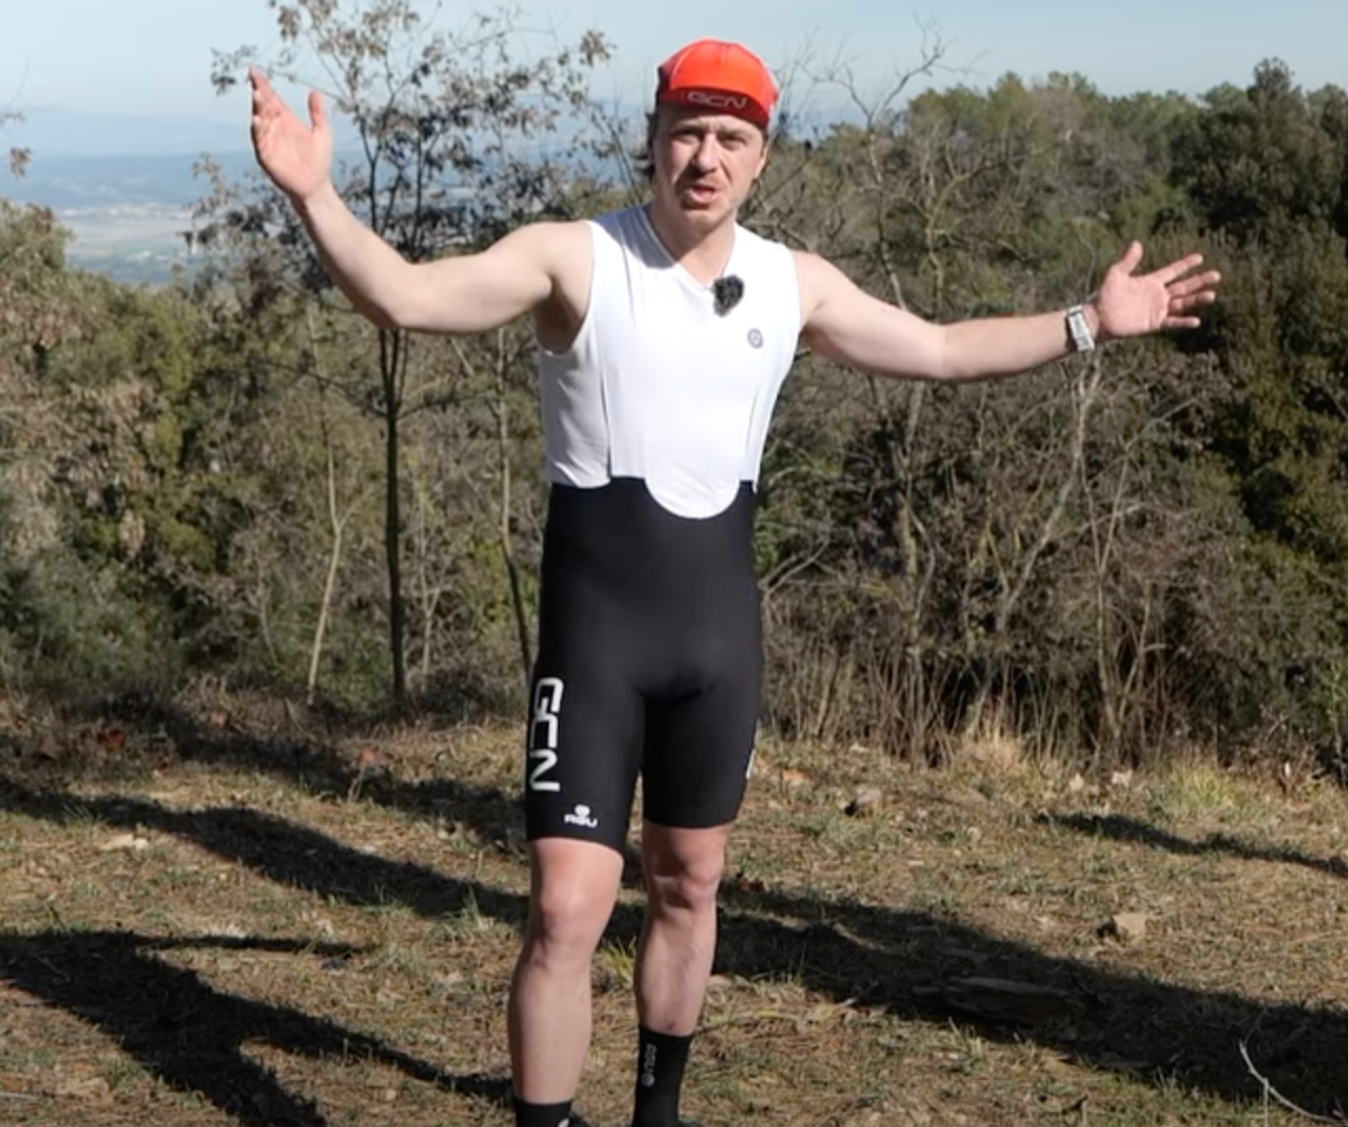 Hank wearing Agu bib shorts - essential cycling kit